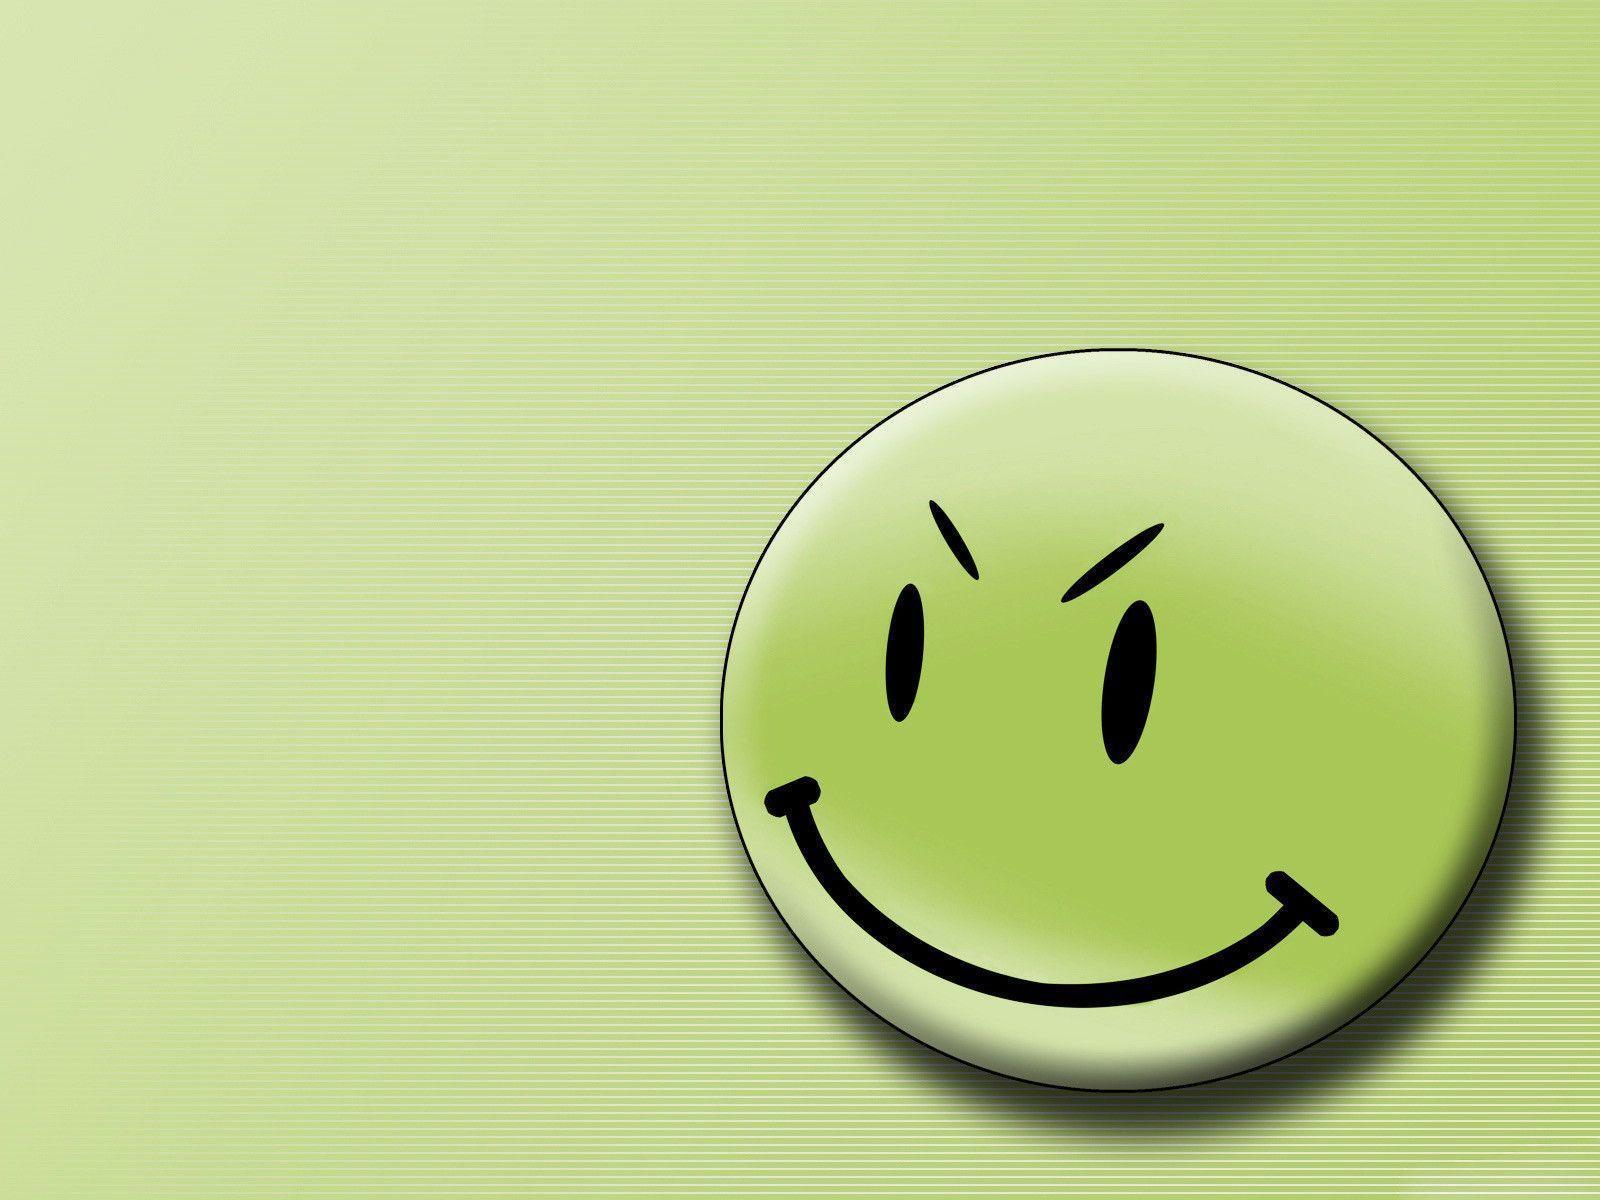 Desktop Wallpaper · Gallery · Computers · Green smiley face